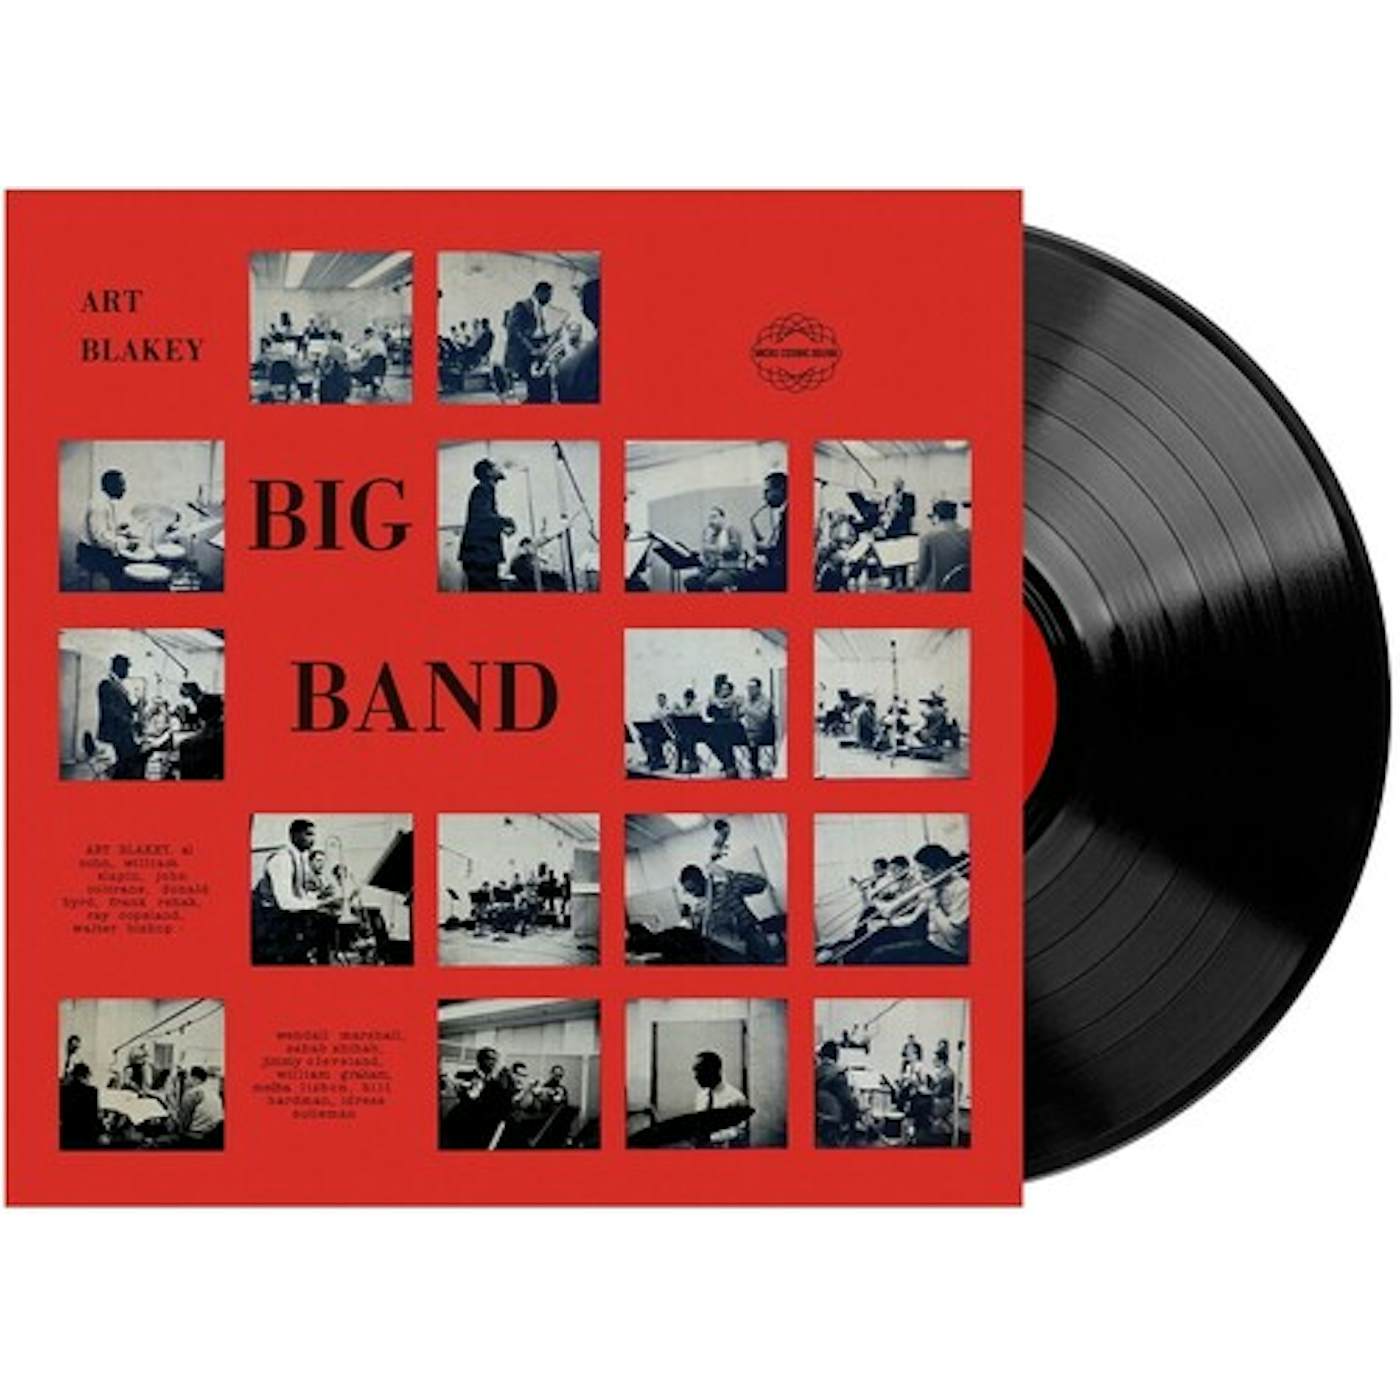 ART BLAKEY BIG BAND Vinyl Record